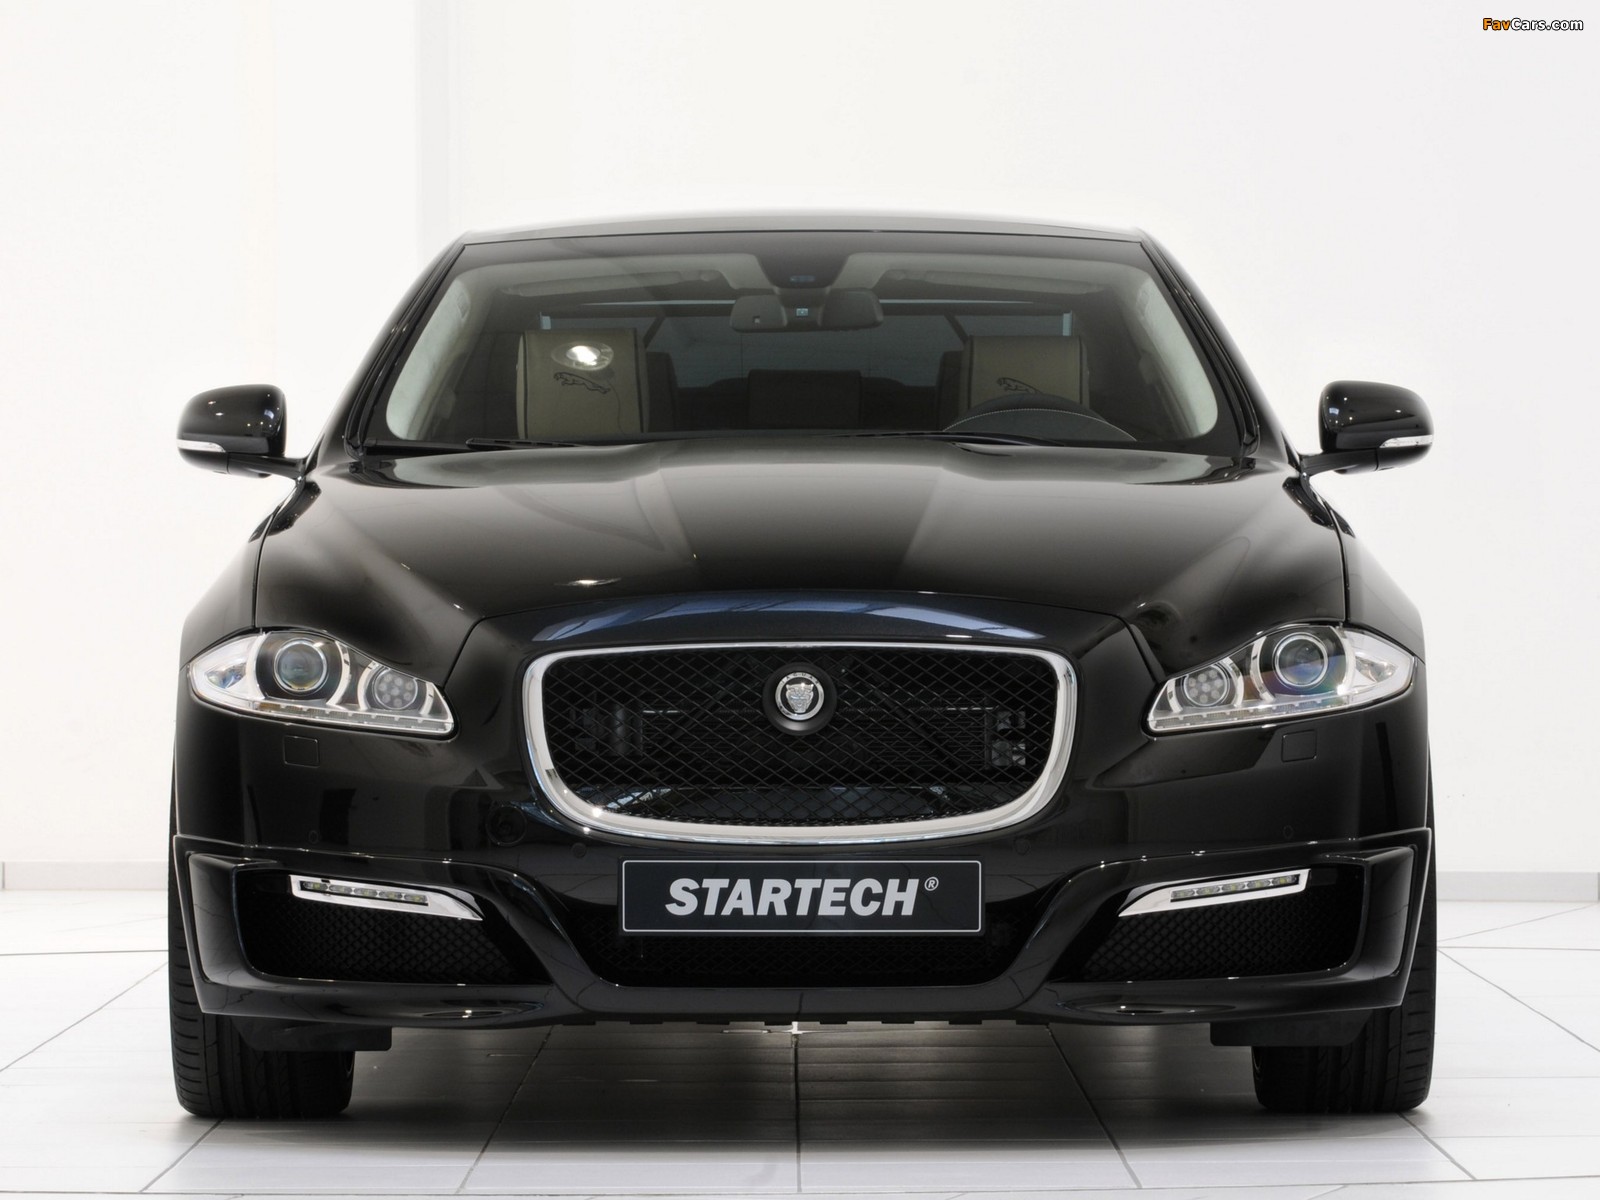 Startech Jaguar XJ (X351) 2011 photos (1600 x 1200)